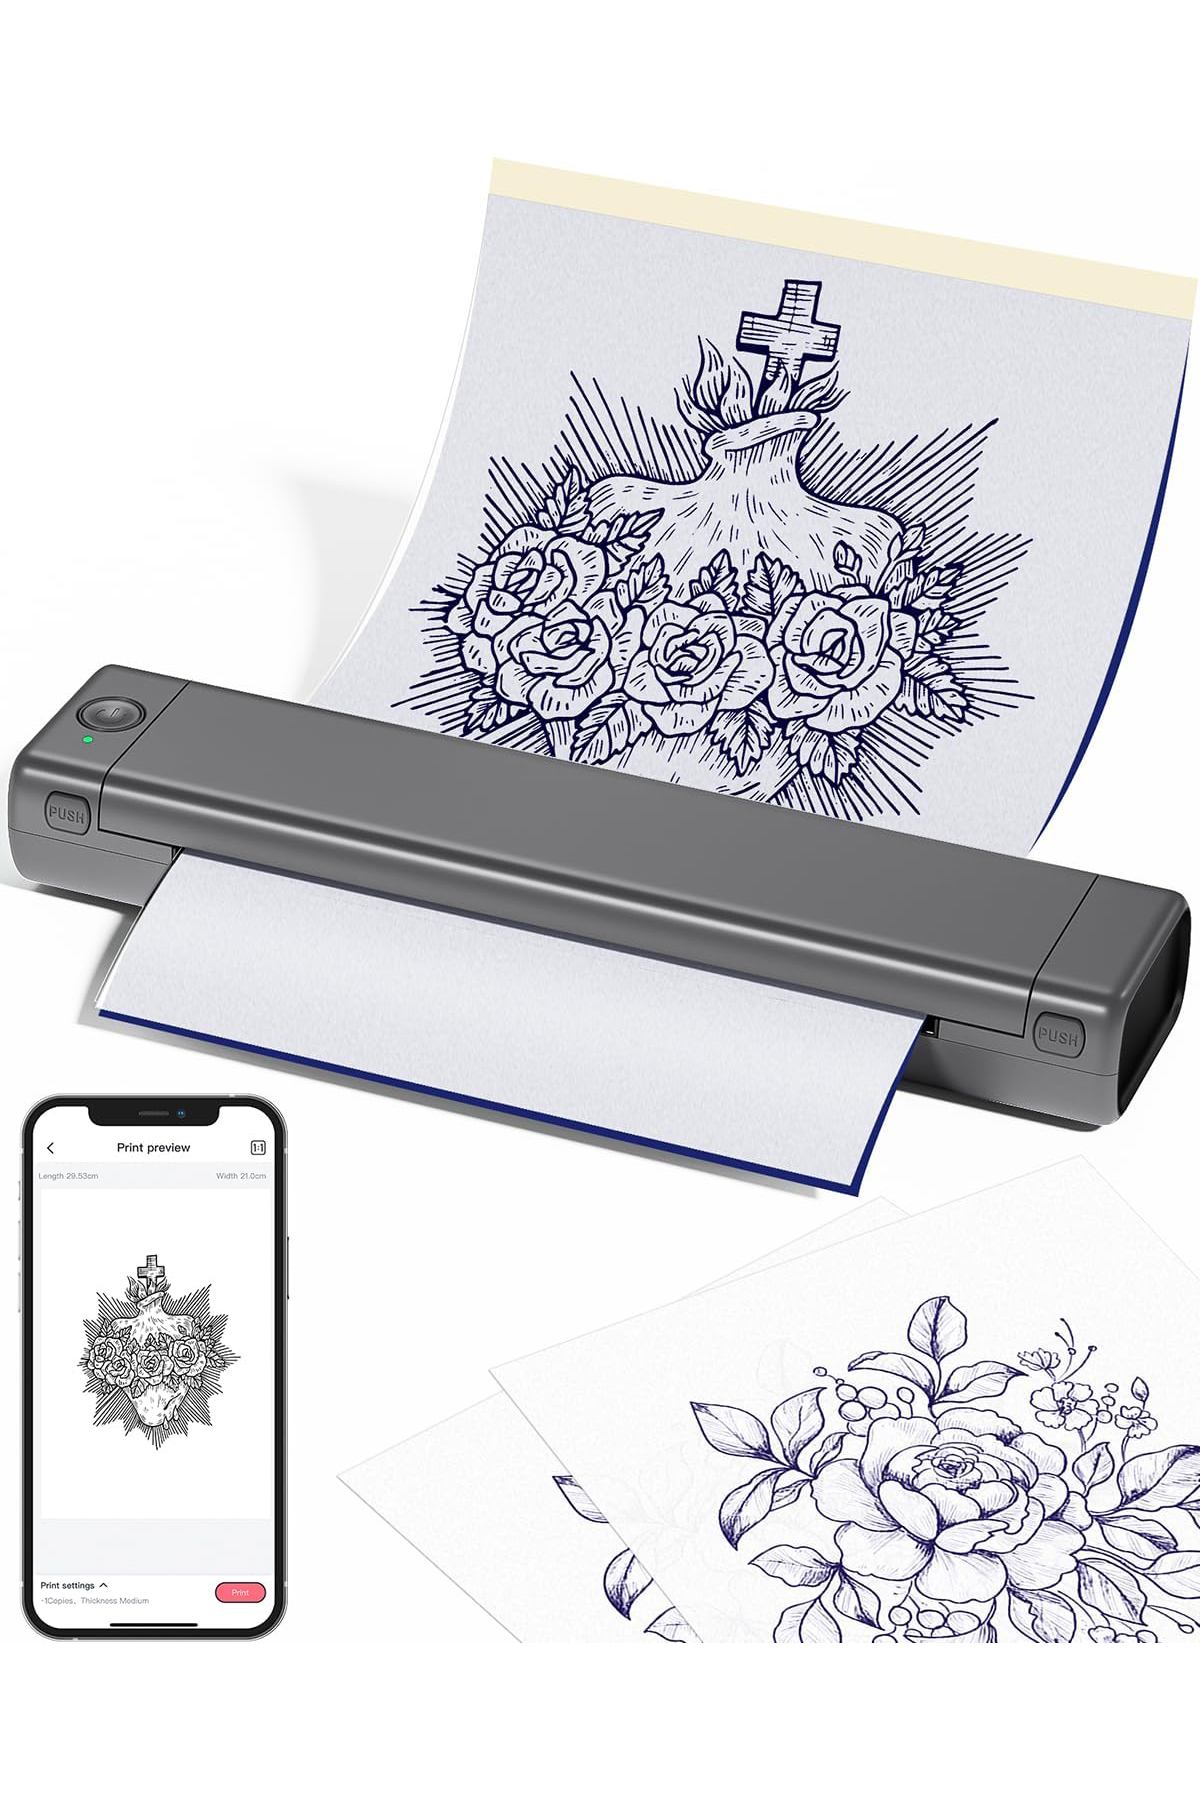 Phomemo M08F Bluetooth Tattoo Stencil Printer, Thermal Tattoo Machine with 10pcs Tattoo Transfer Paper, Portable Wireless Stencil Printer for Tattooing, Compatible with Smartphone & PC, Grey